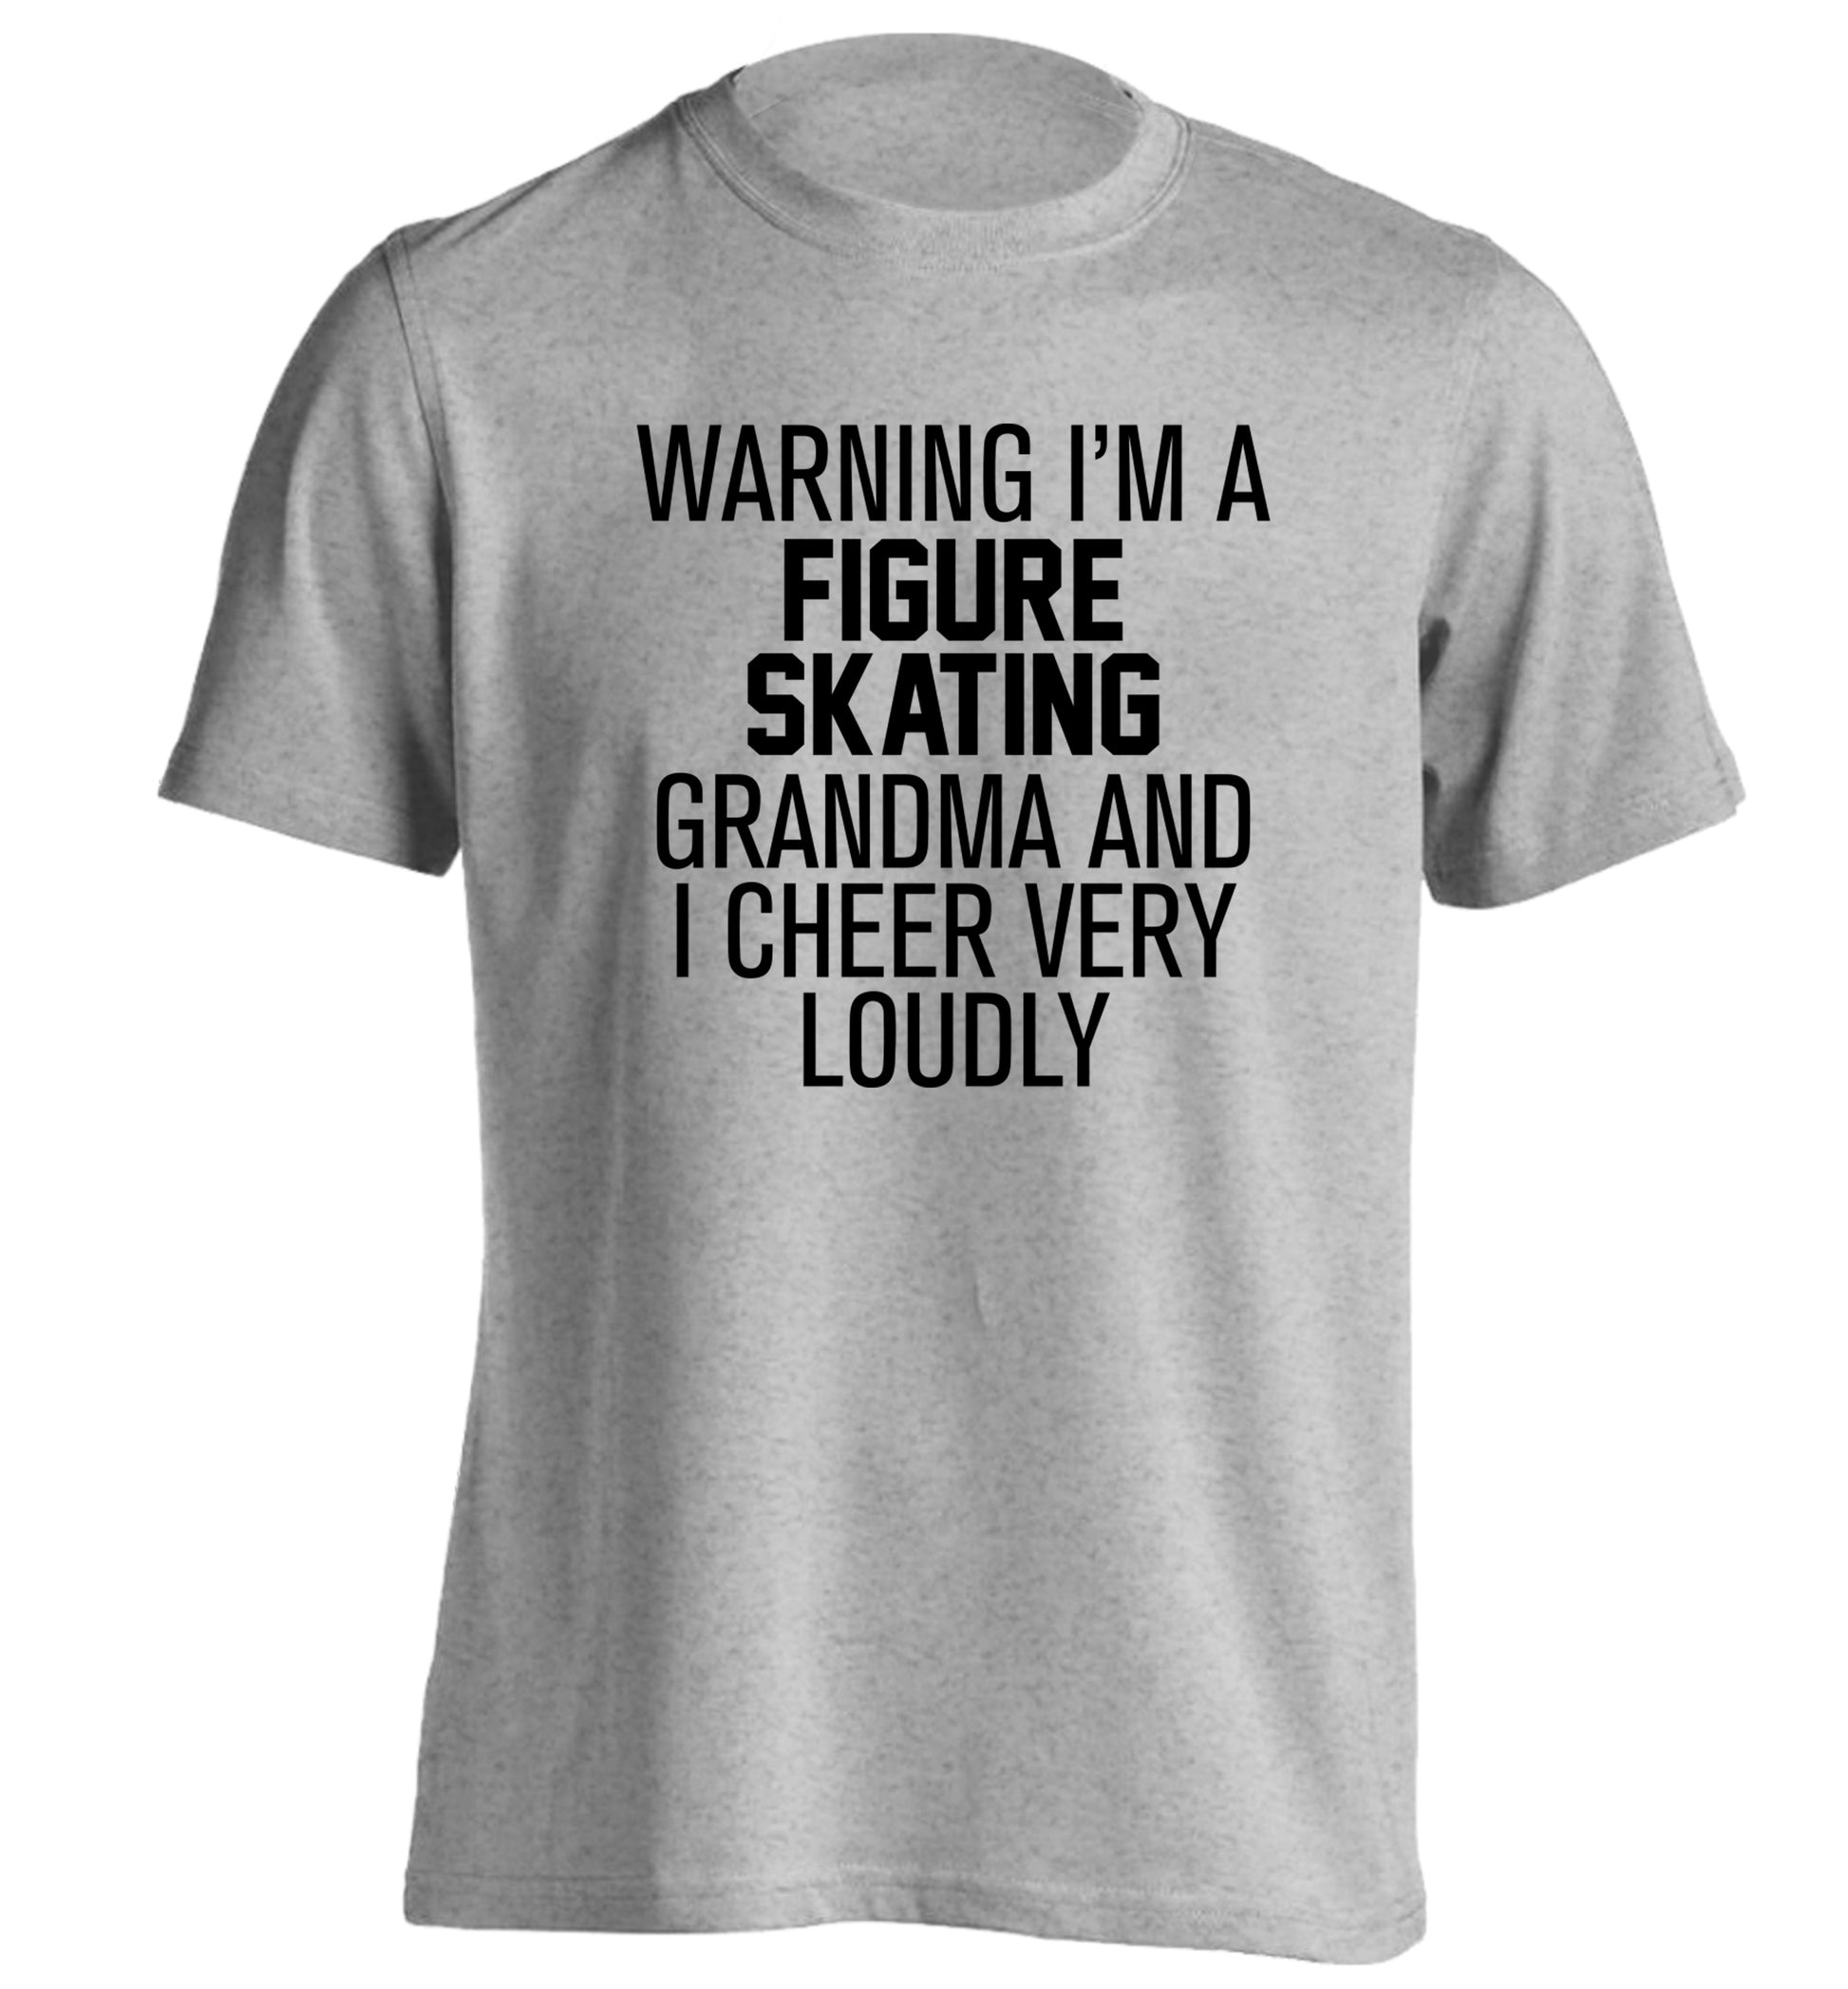 Warning I'm a figure skating grandma and I cheer very loudly adults unisexgrey Tshirt 2XL